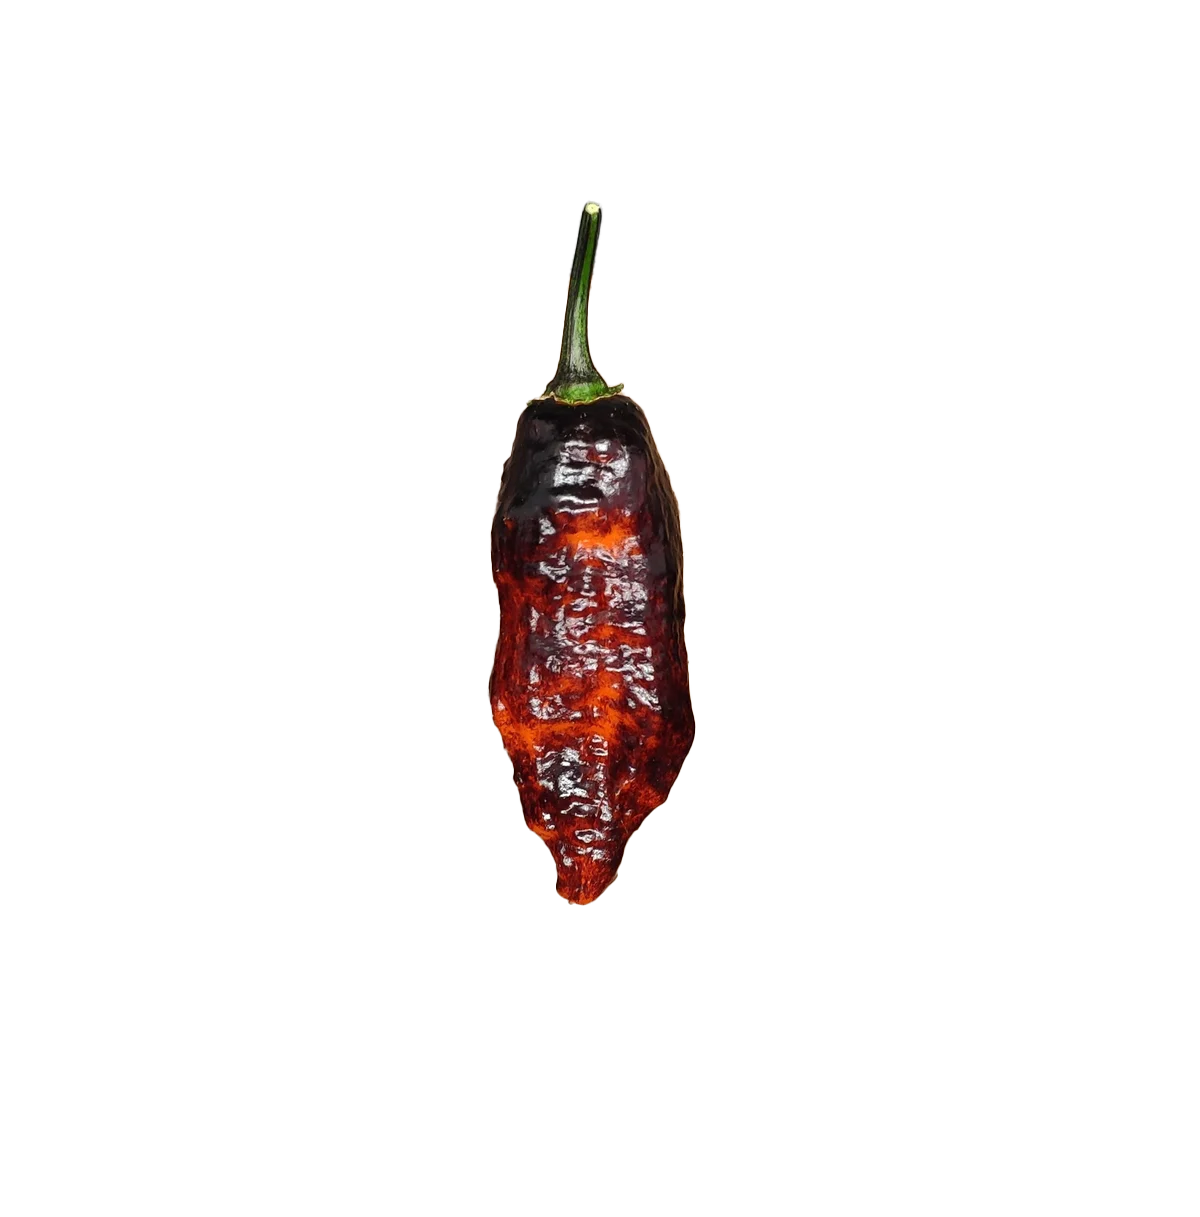 Hallows Eve pepper